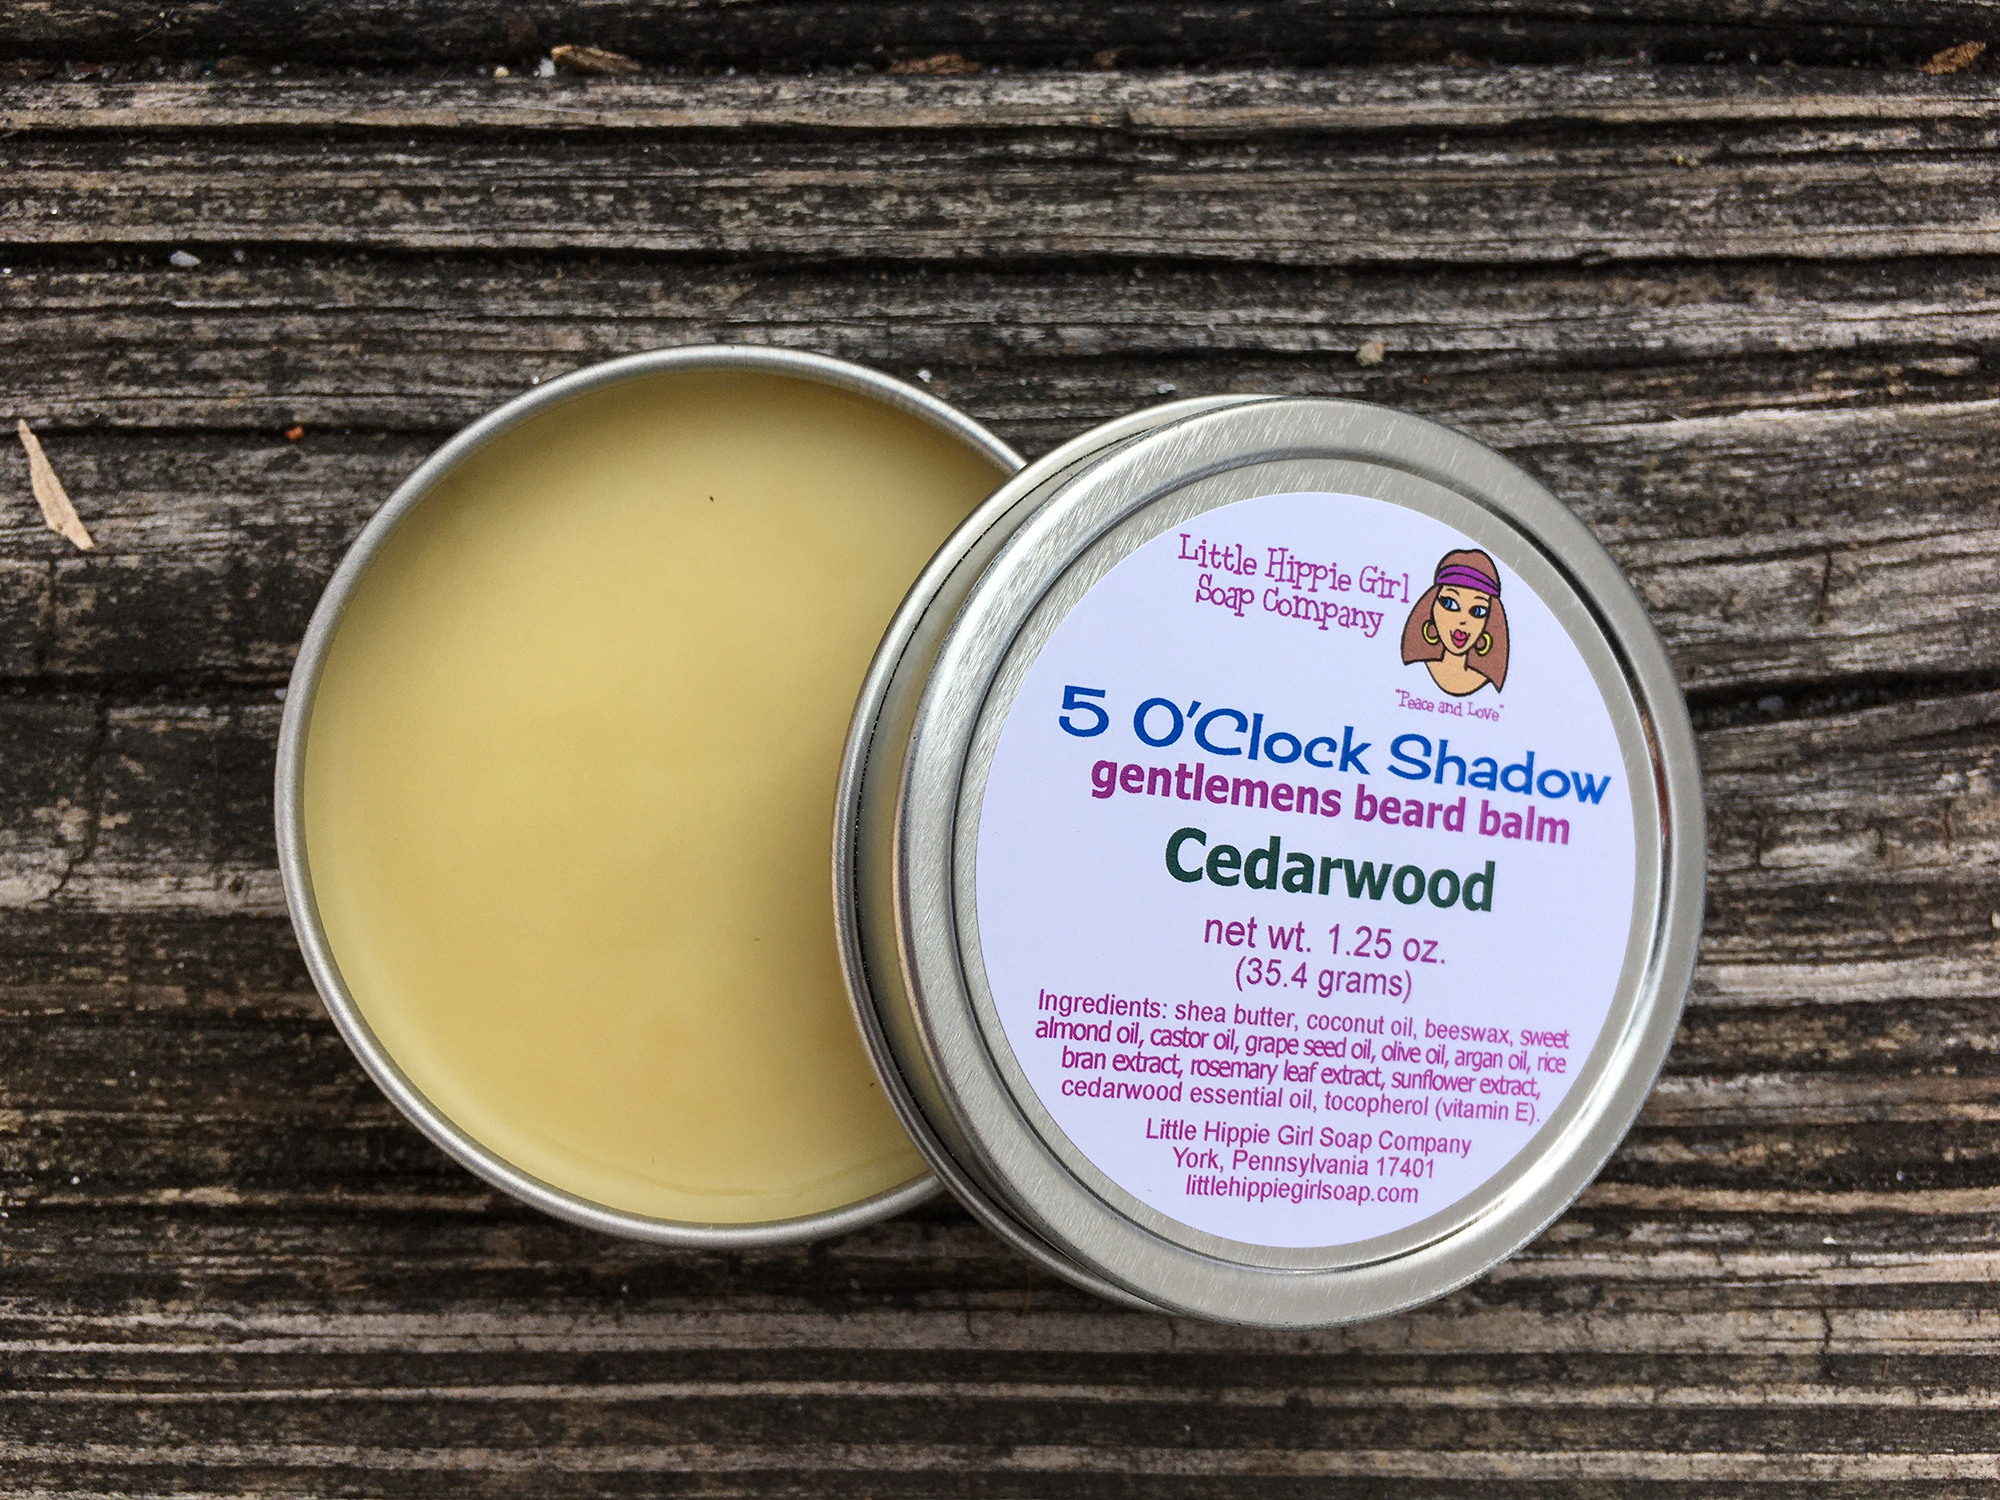 5 O' Clock Shadow Cedarwood Beard Balm - Click to Enlarge Photo